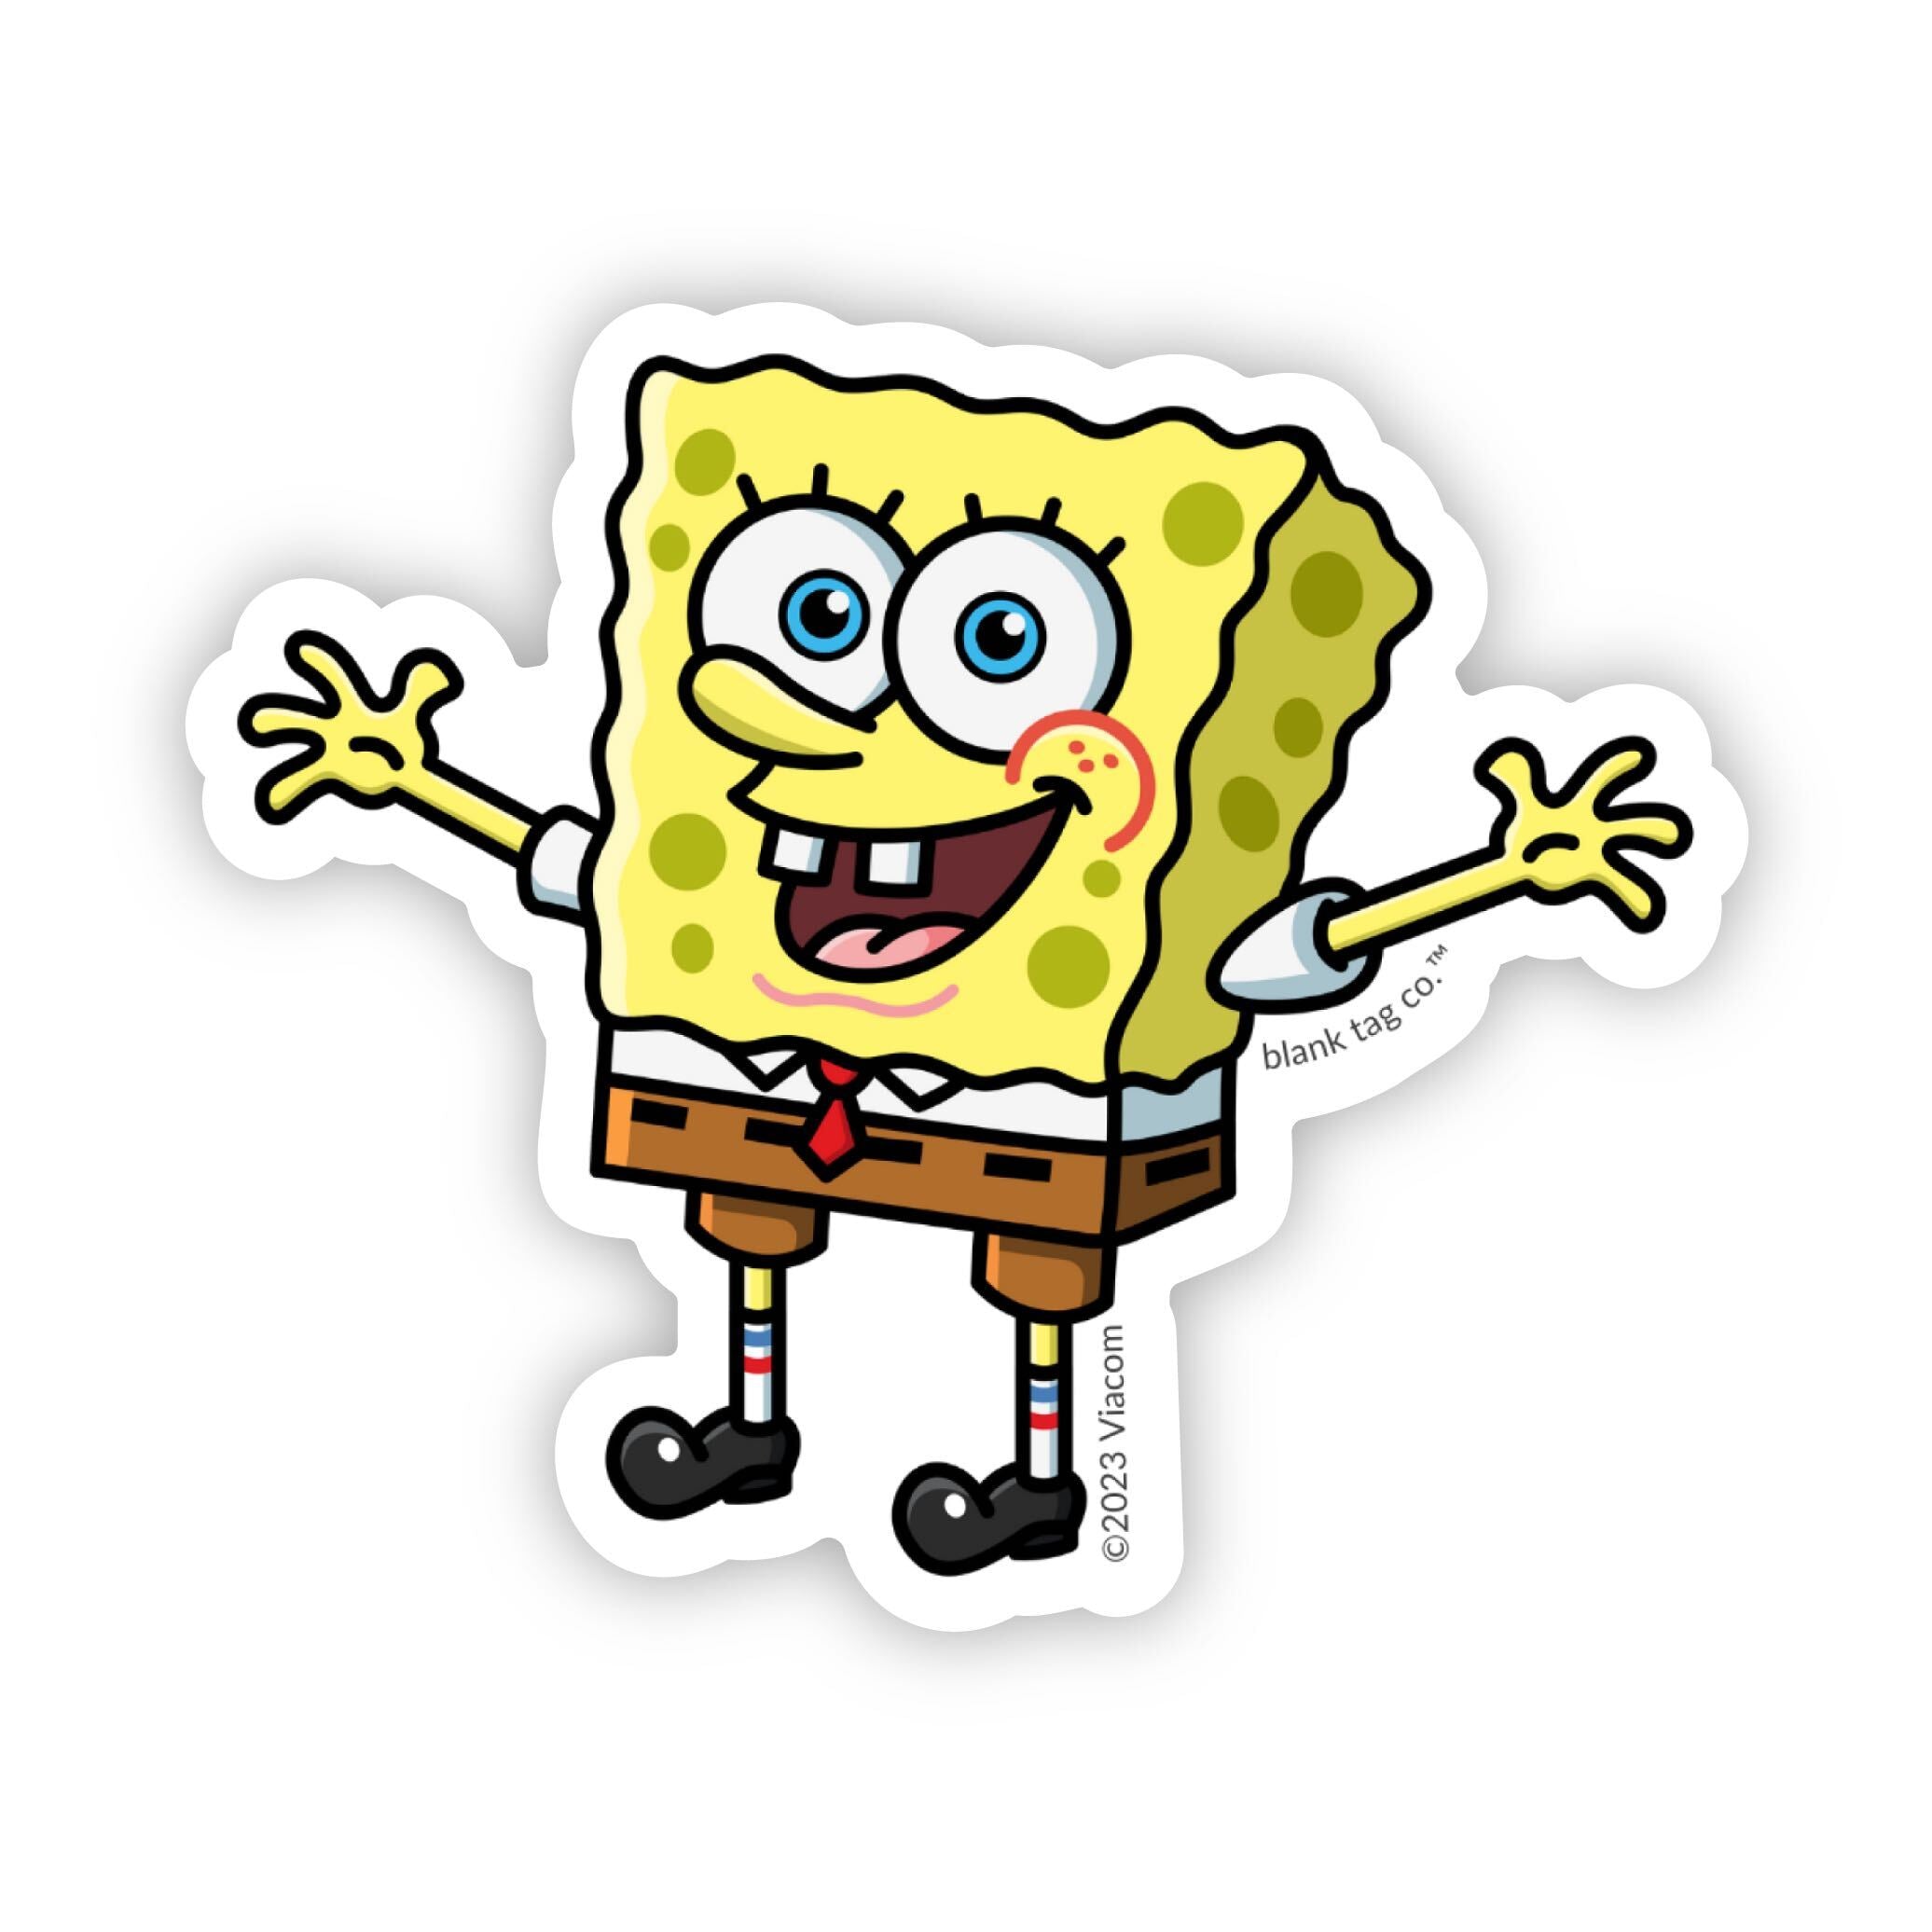 The SpongeBob SquarePants Sticker